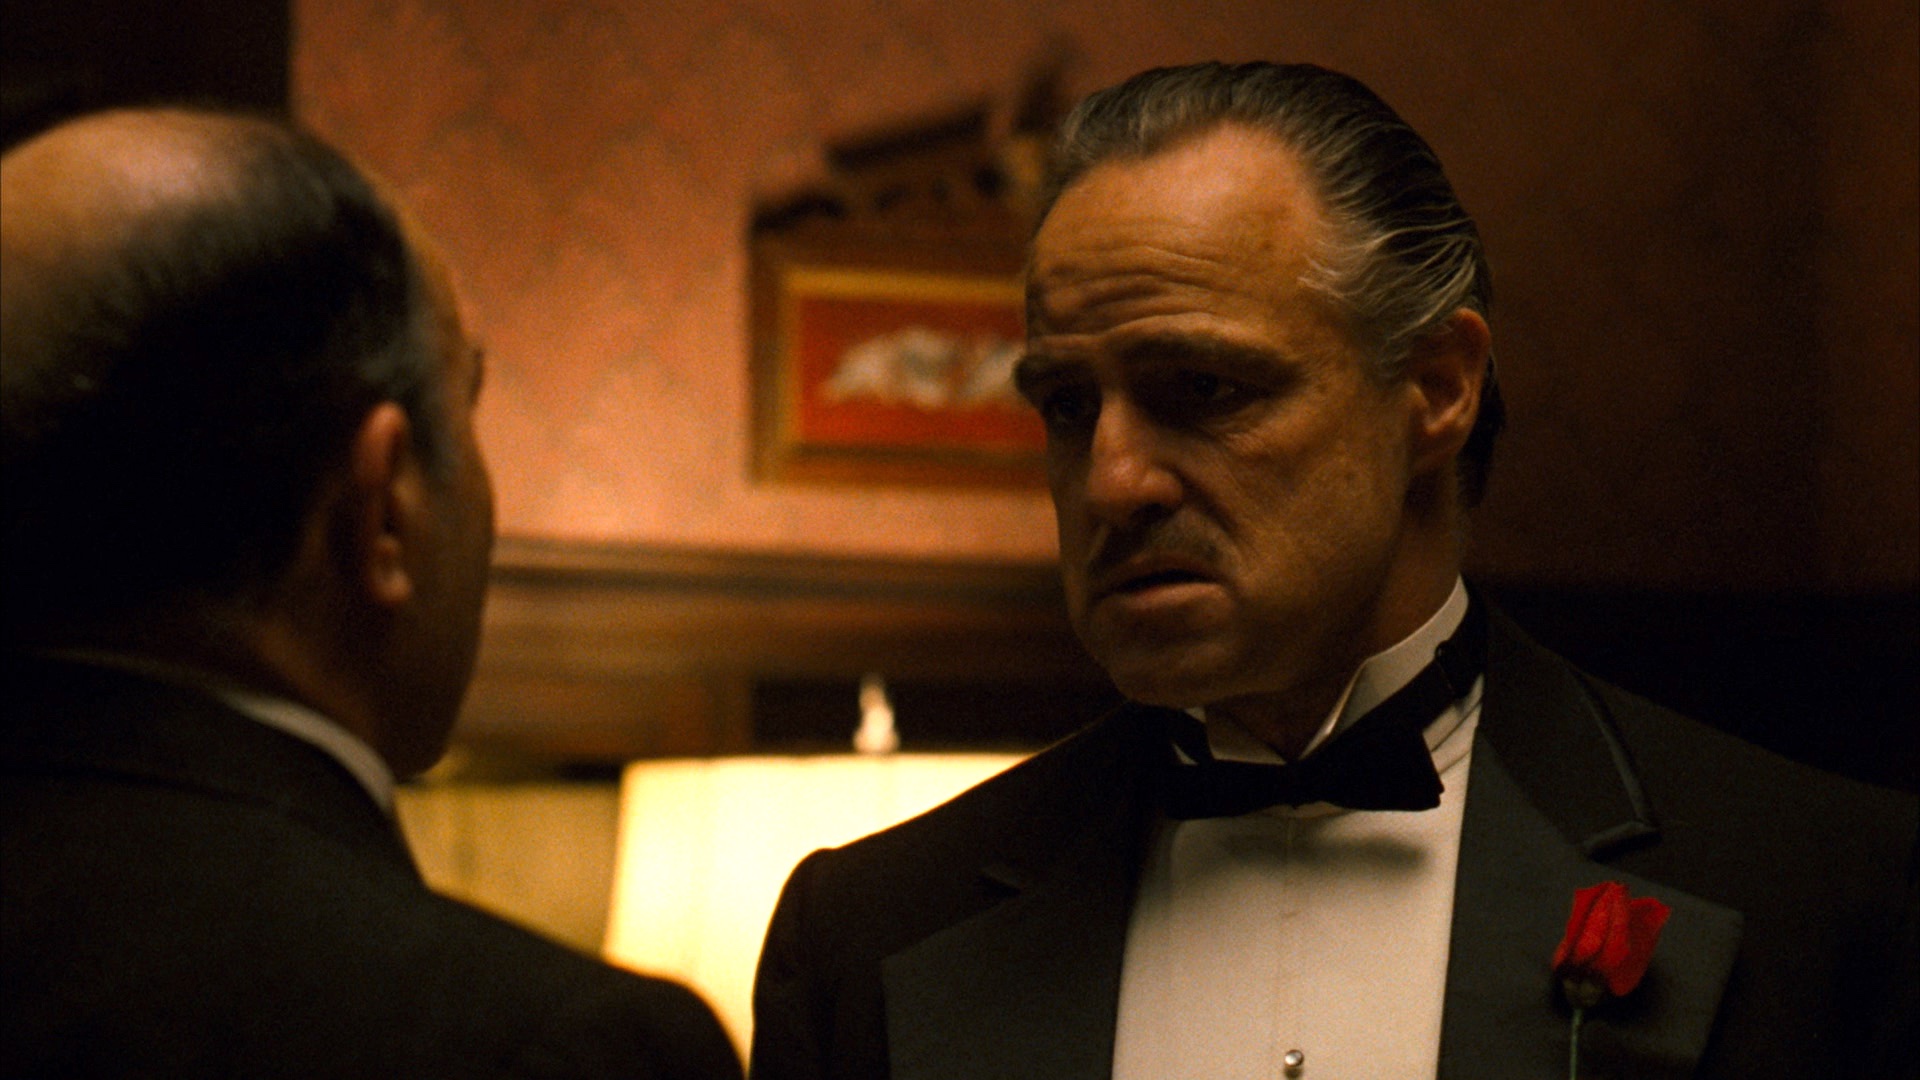 Marlon Brando as the godfather in The Godfather